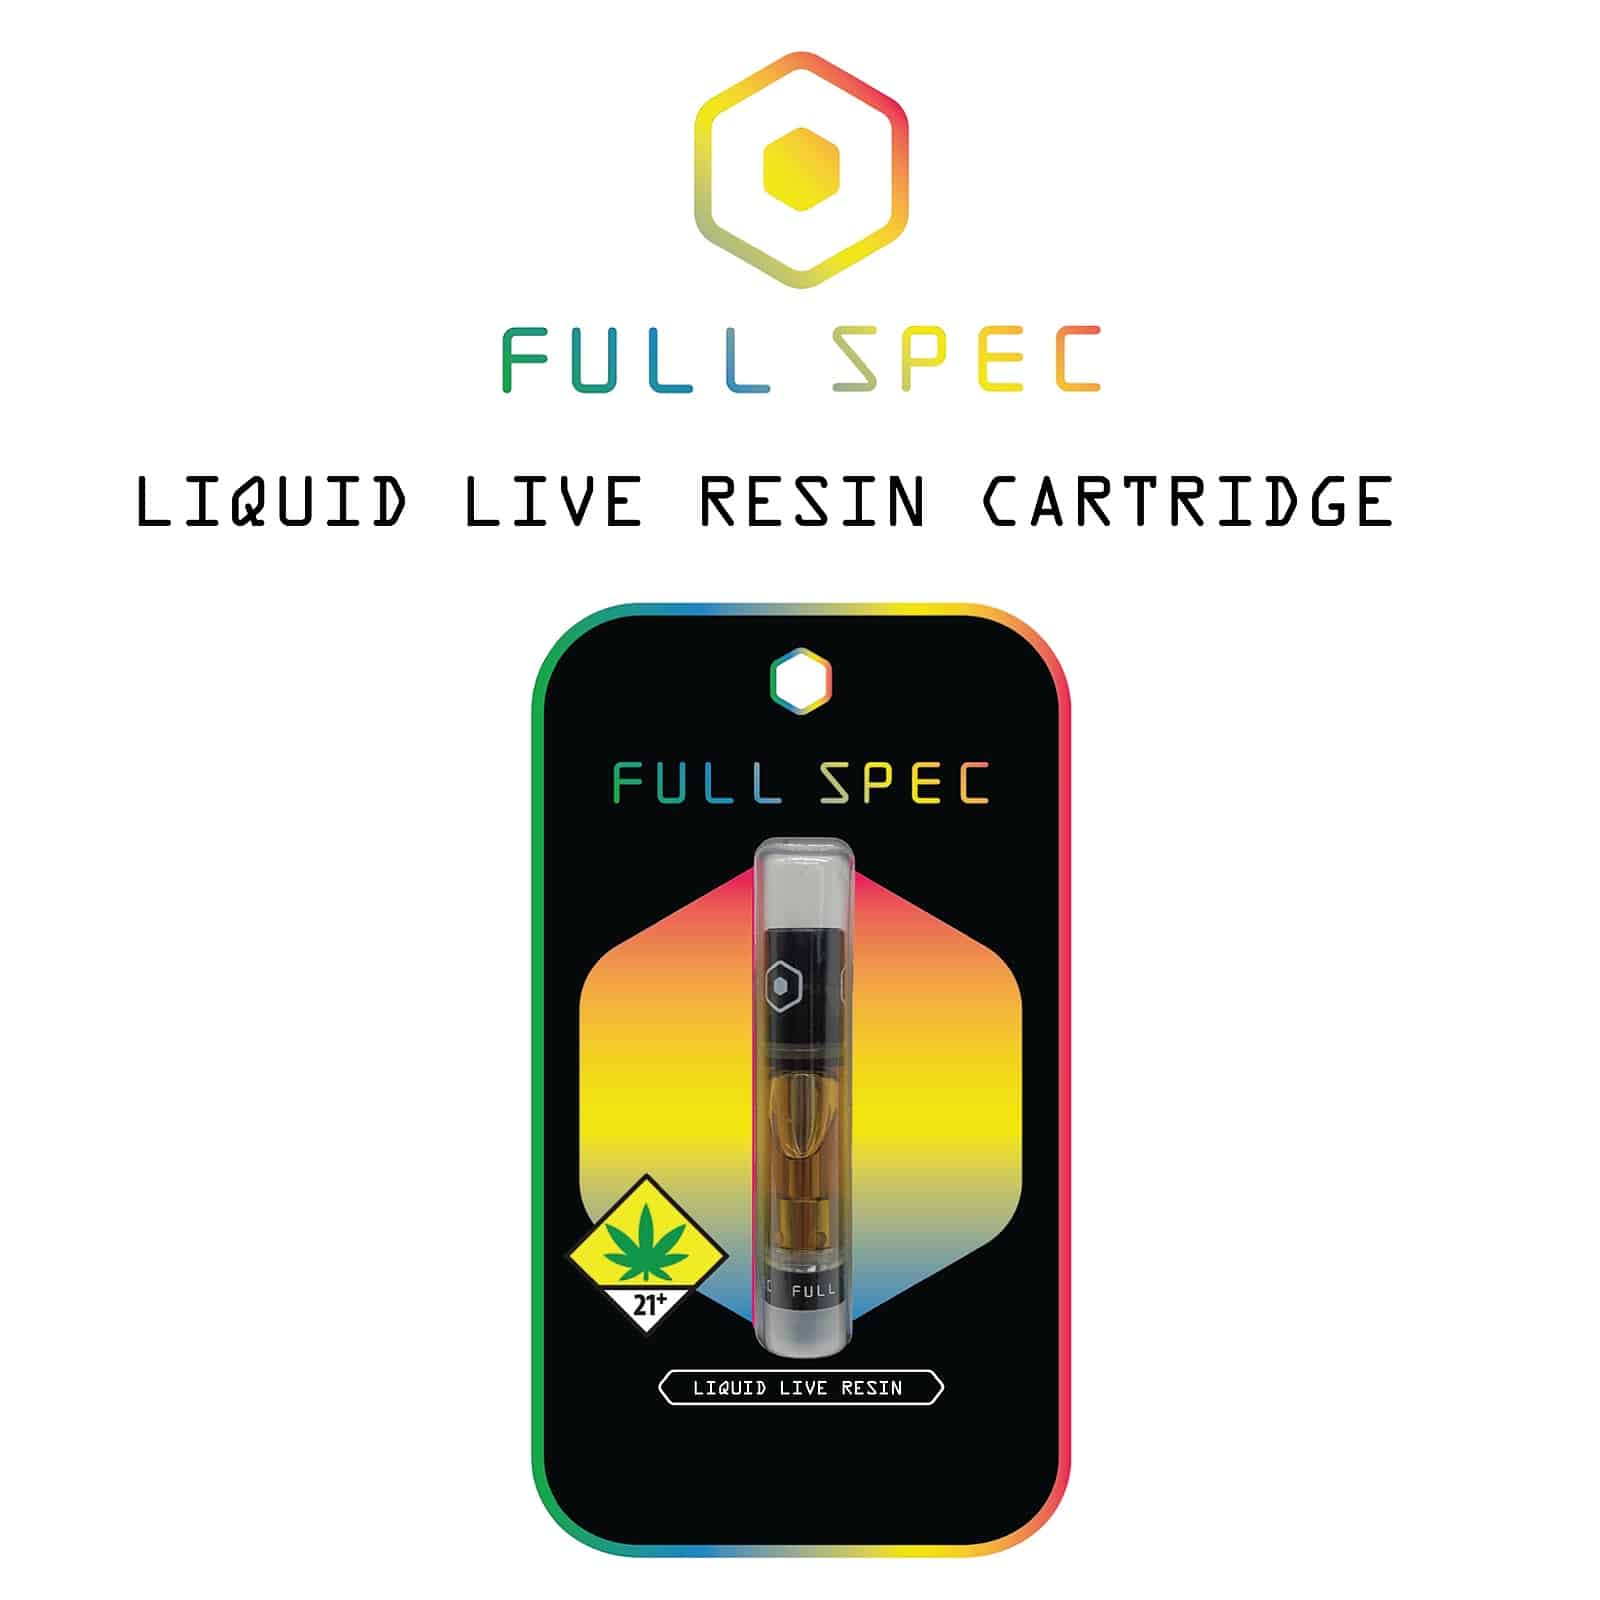 Full Spec Cannabis Live Resin Cartridge